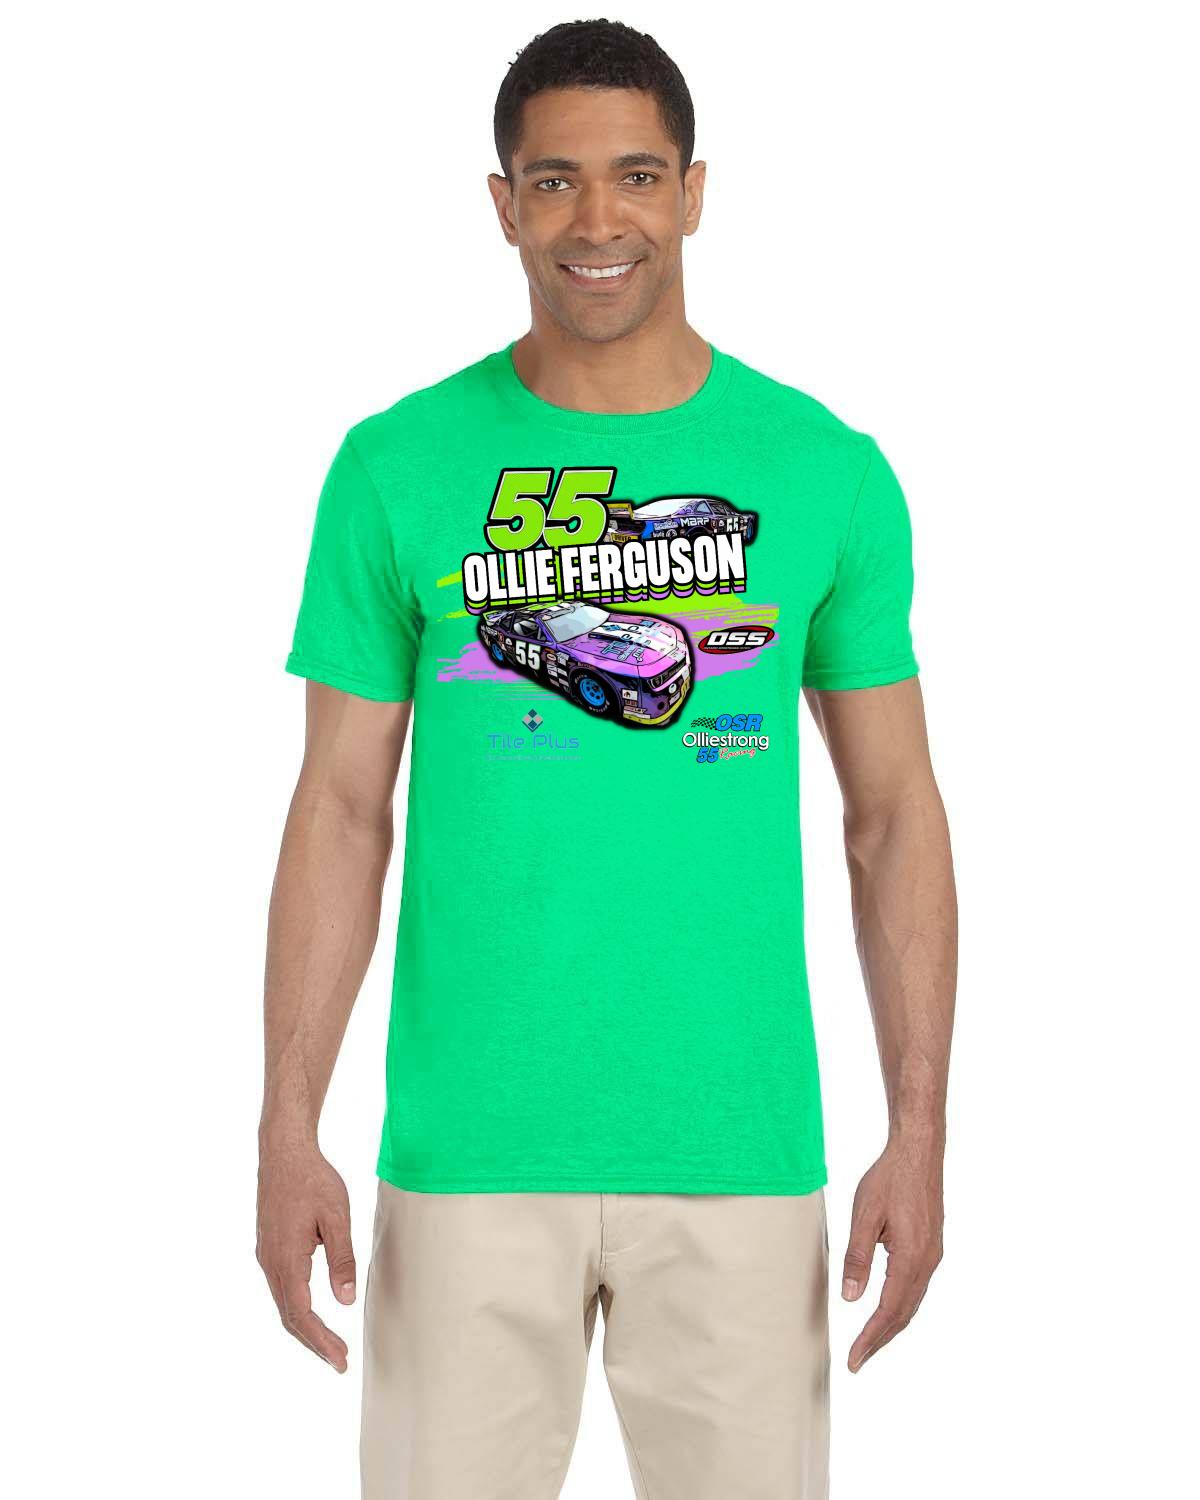 Oliver Ferguson OSR Adult Tshirt